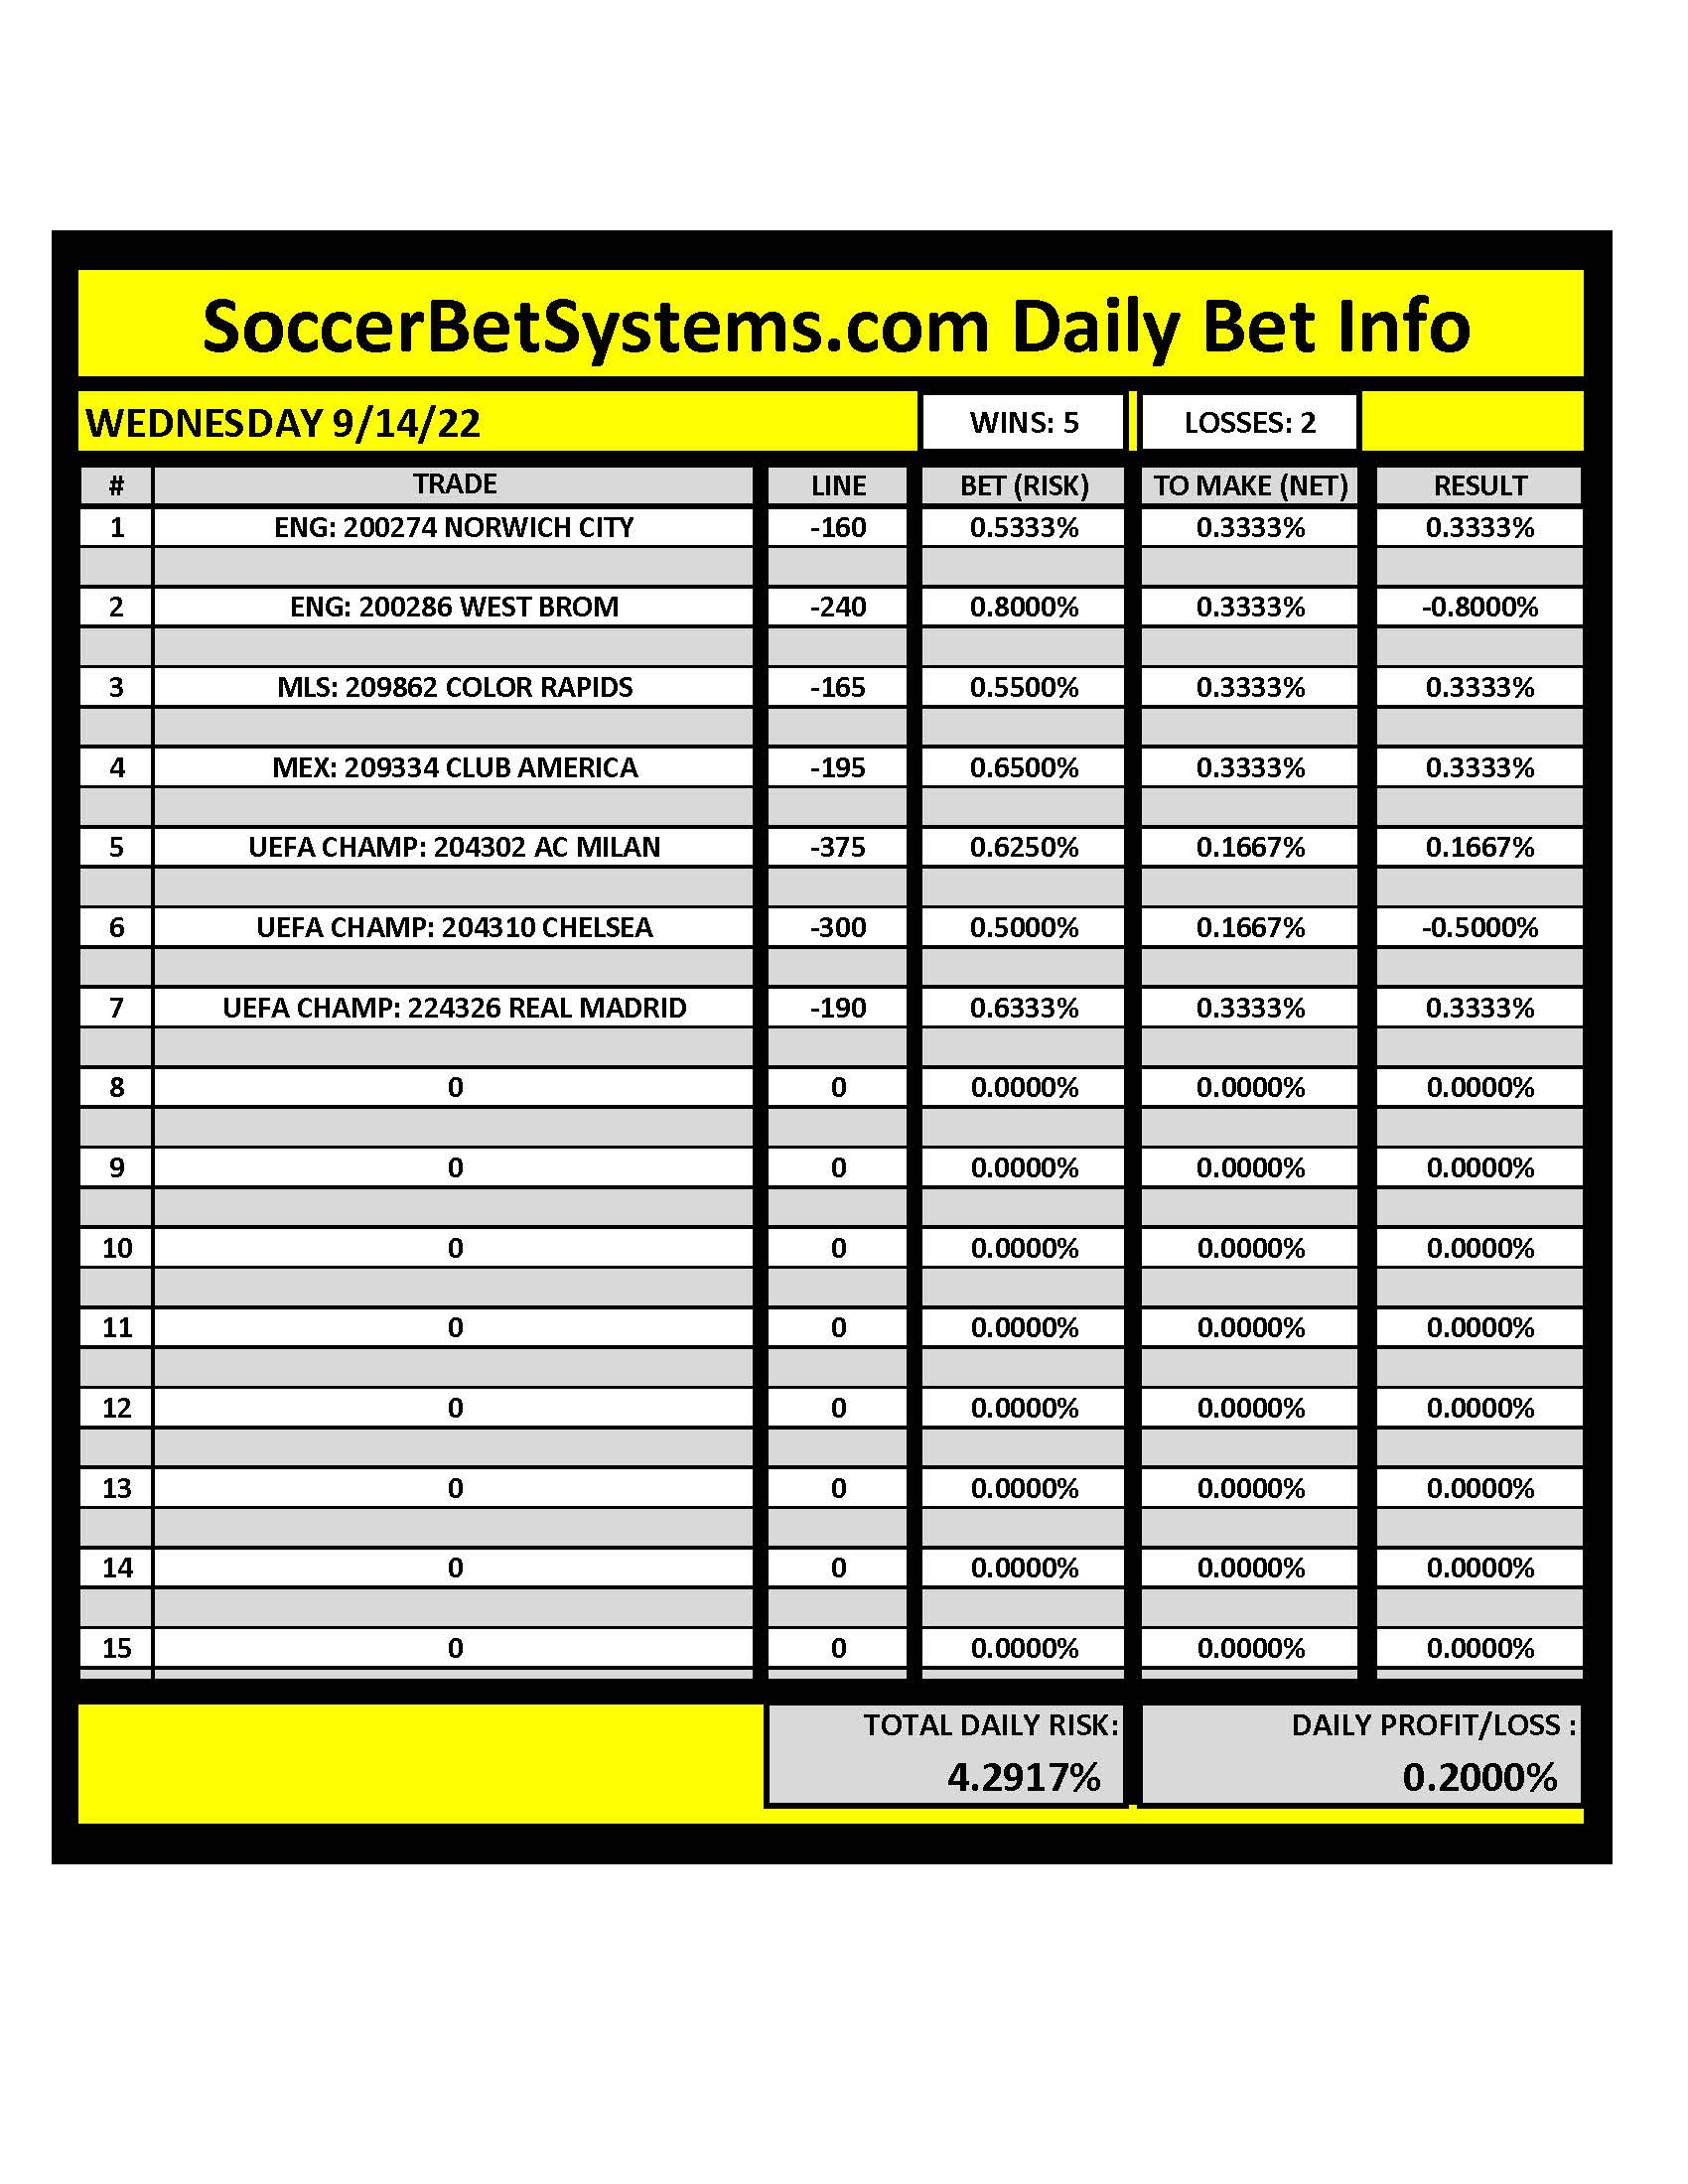 SoccerBetSystems.com 9/14/22 Daily Results